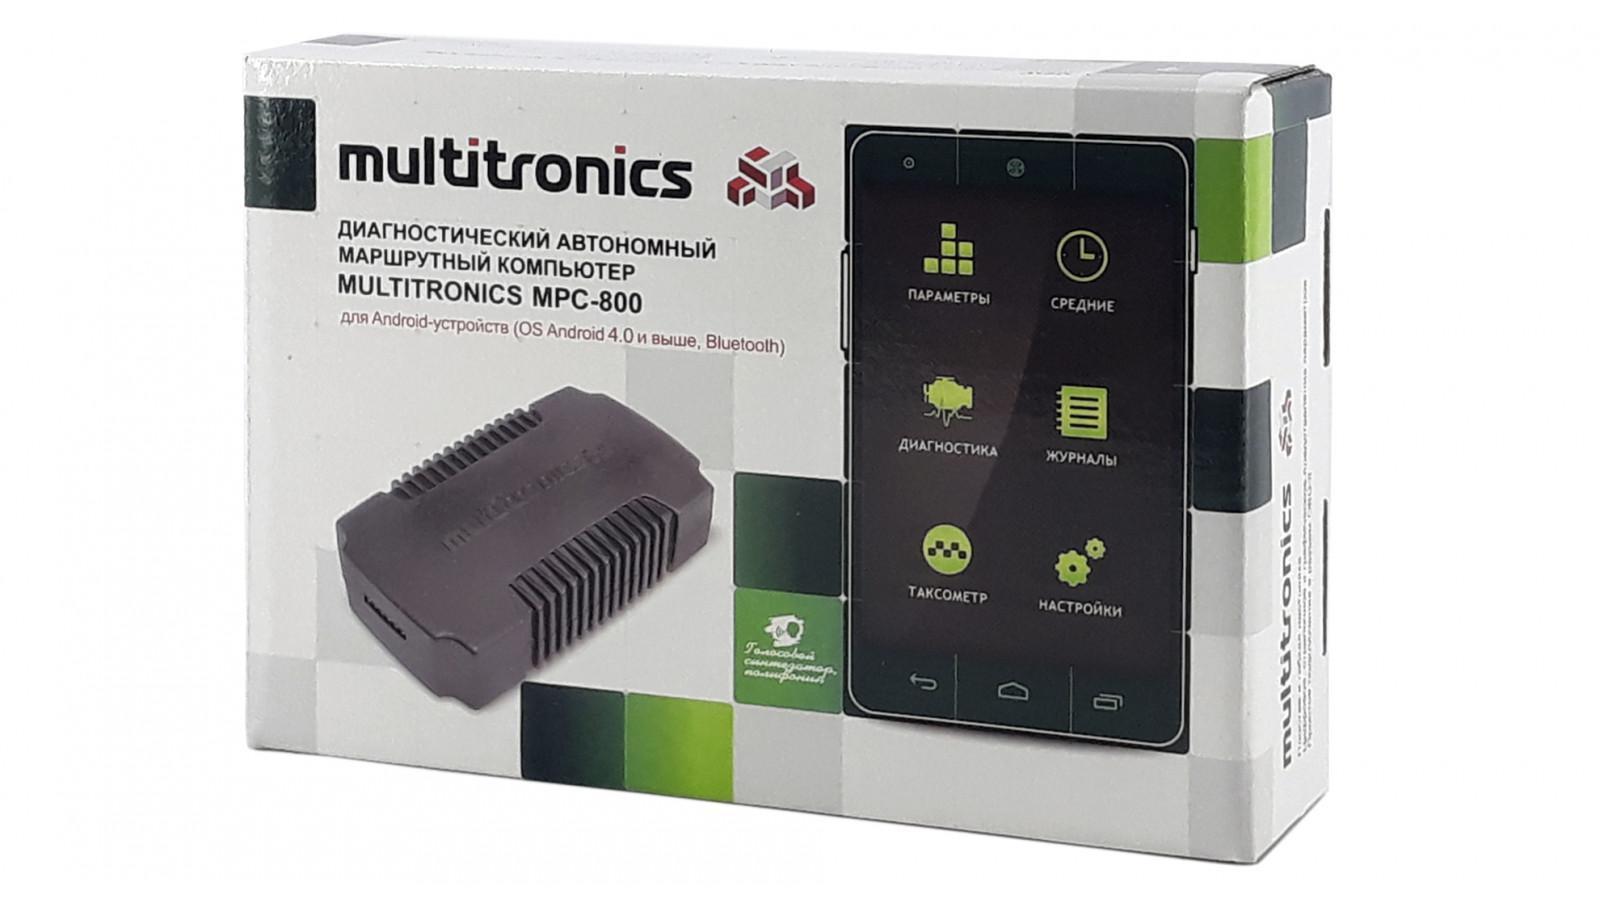 Multitronics mpc 800 on-board computer: model advantages, instructions, driver reviews